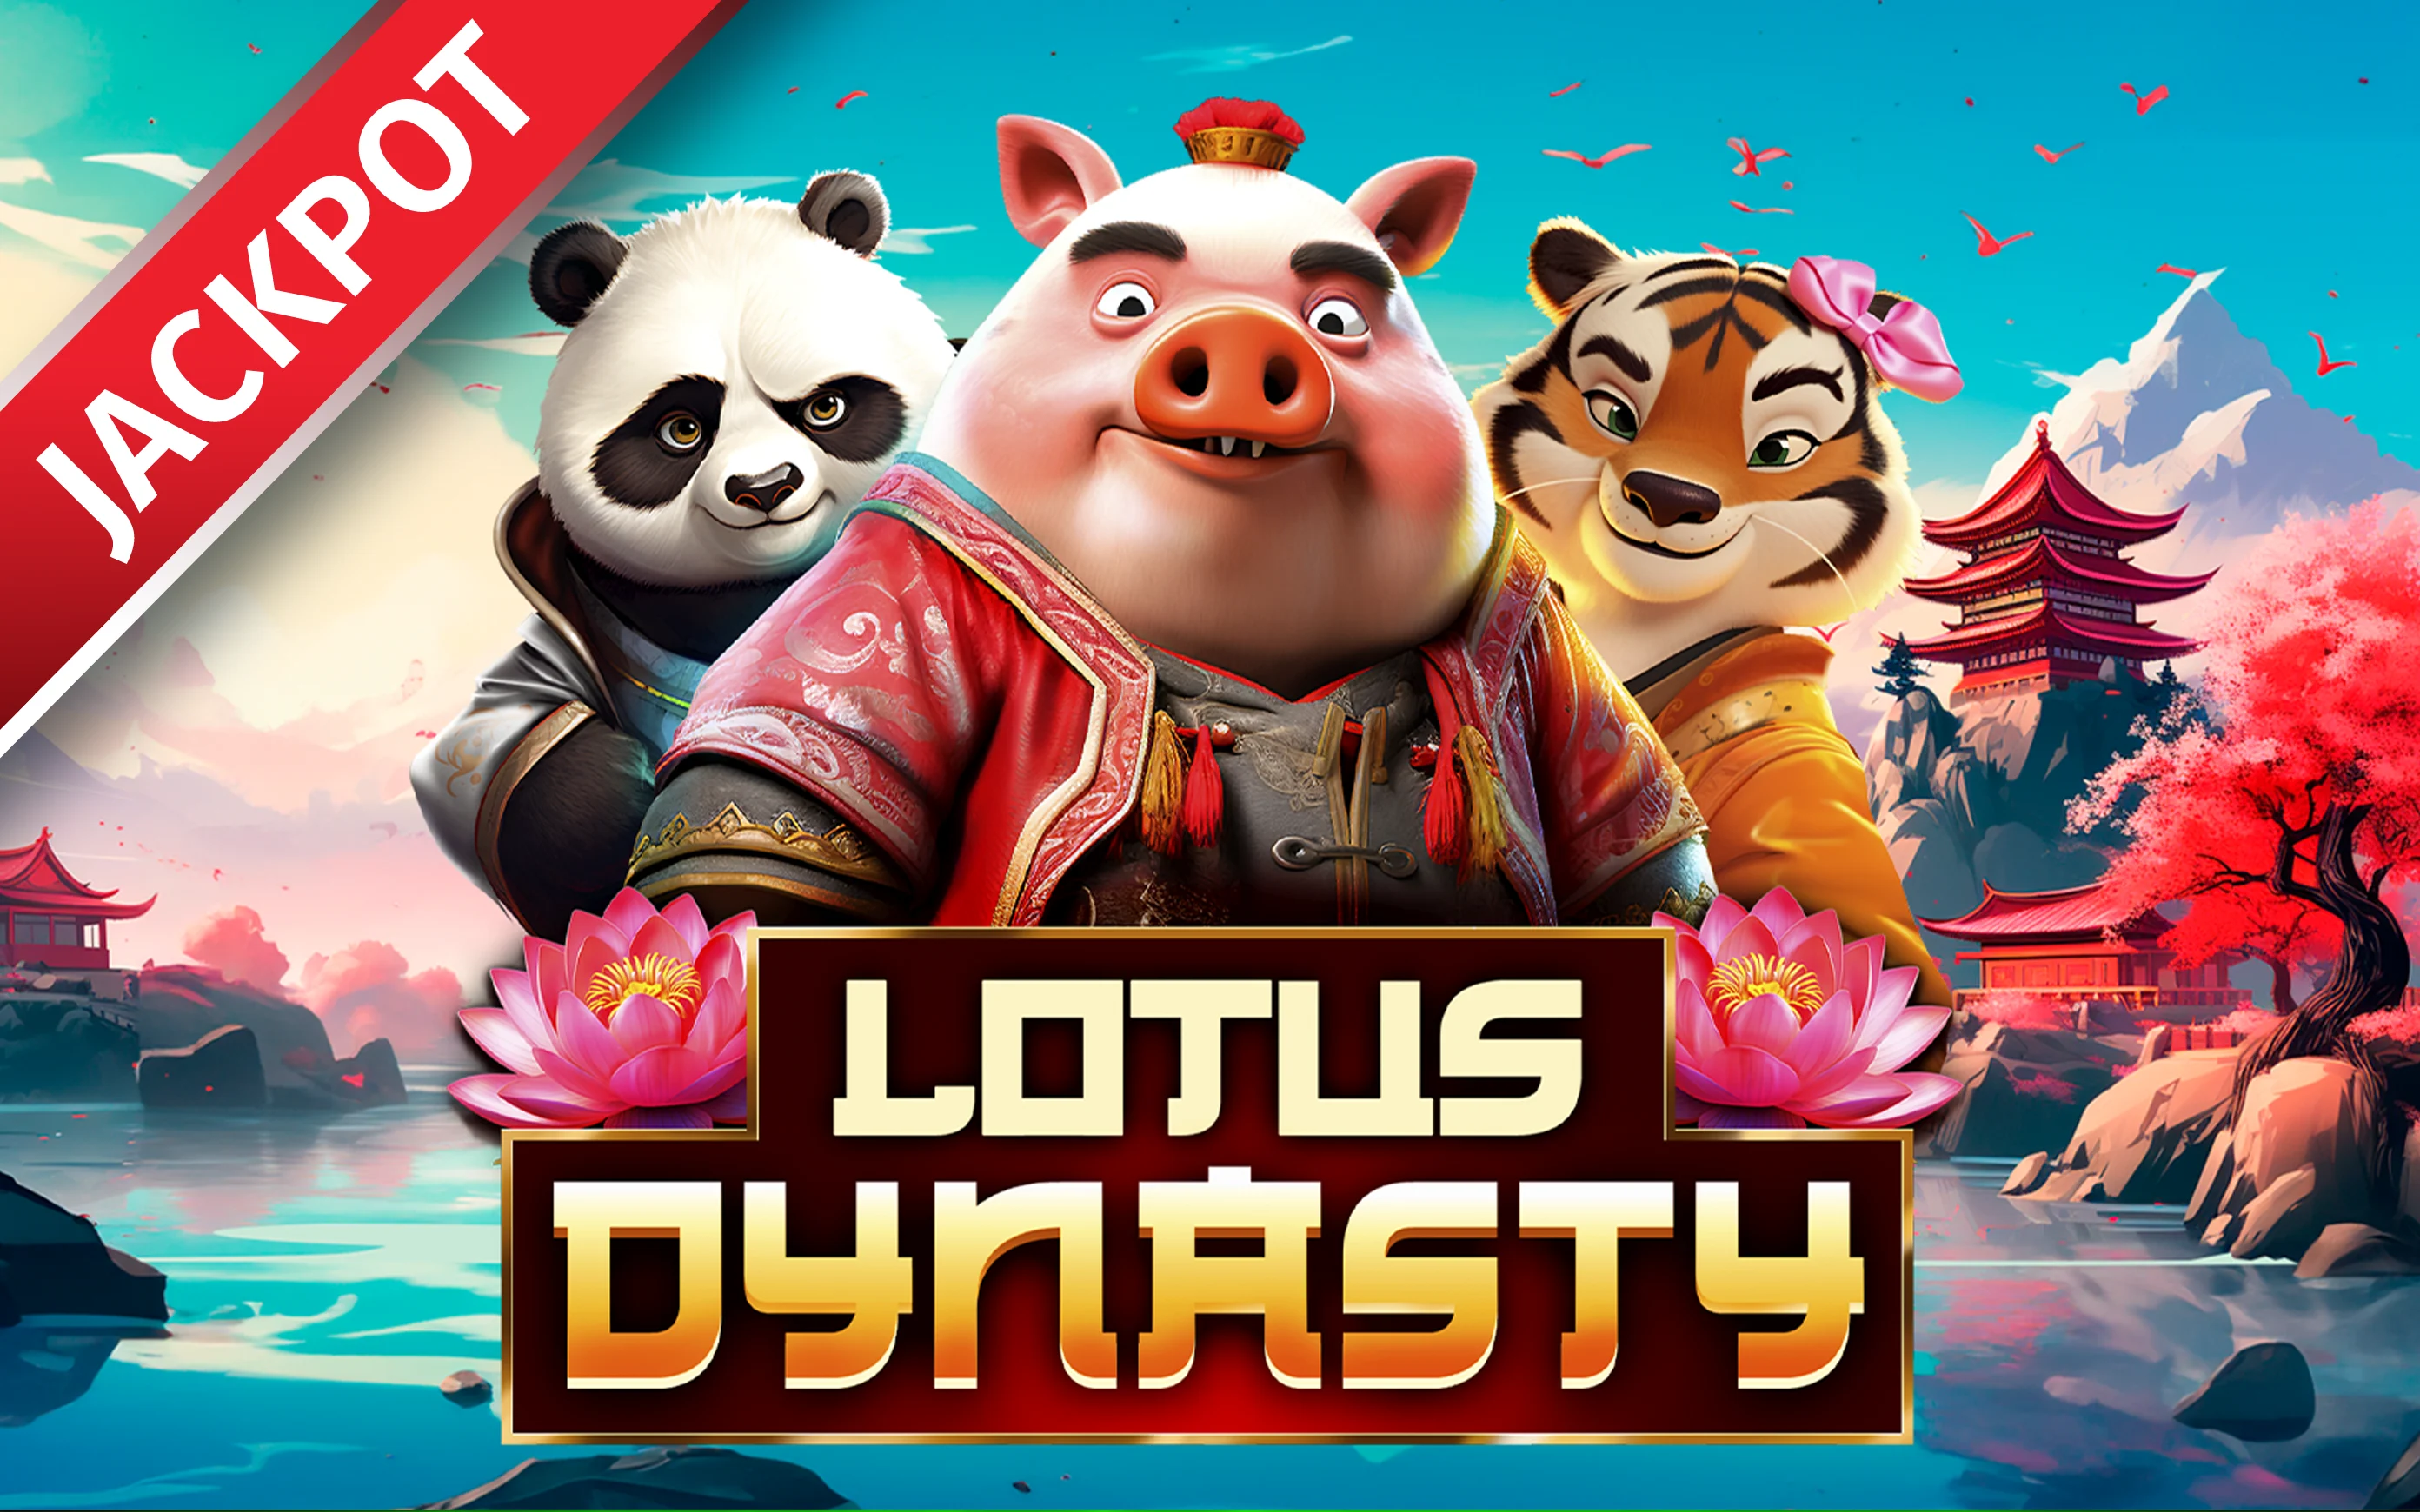 Play Lotus Dynasty on Starcasino.be online casino